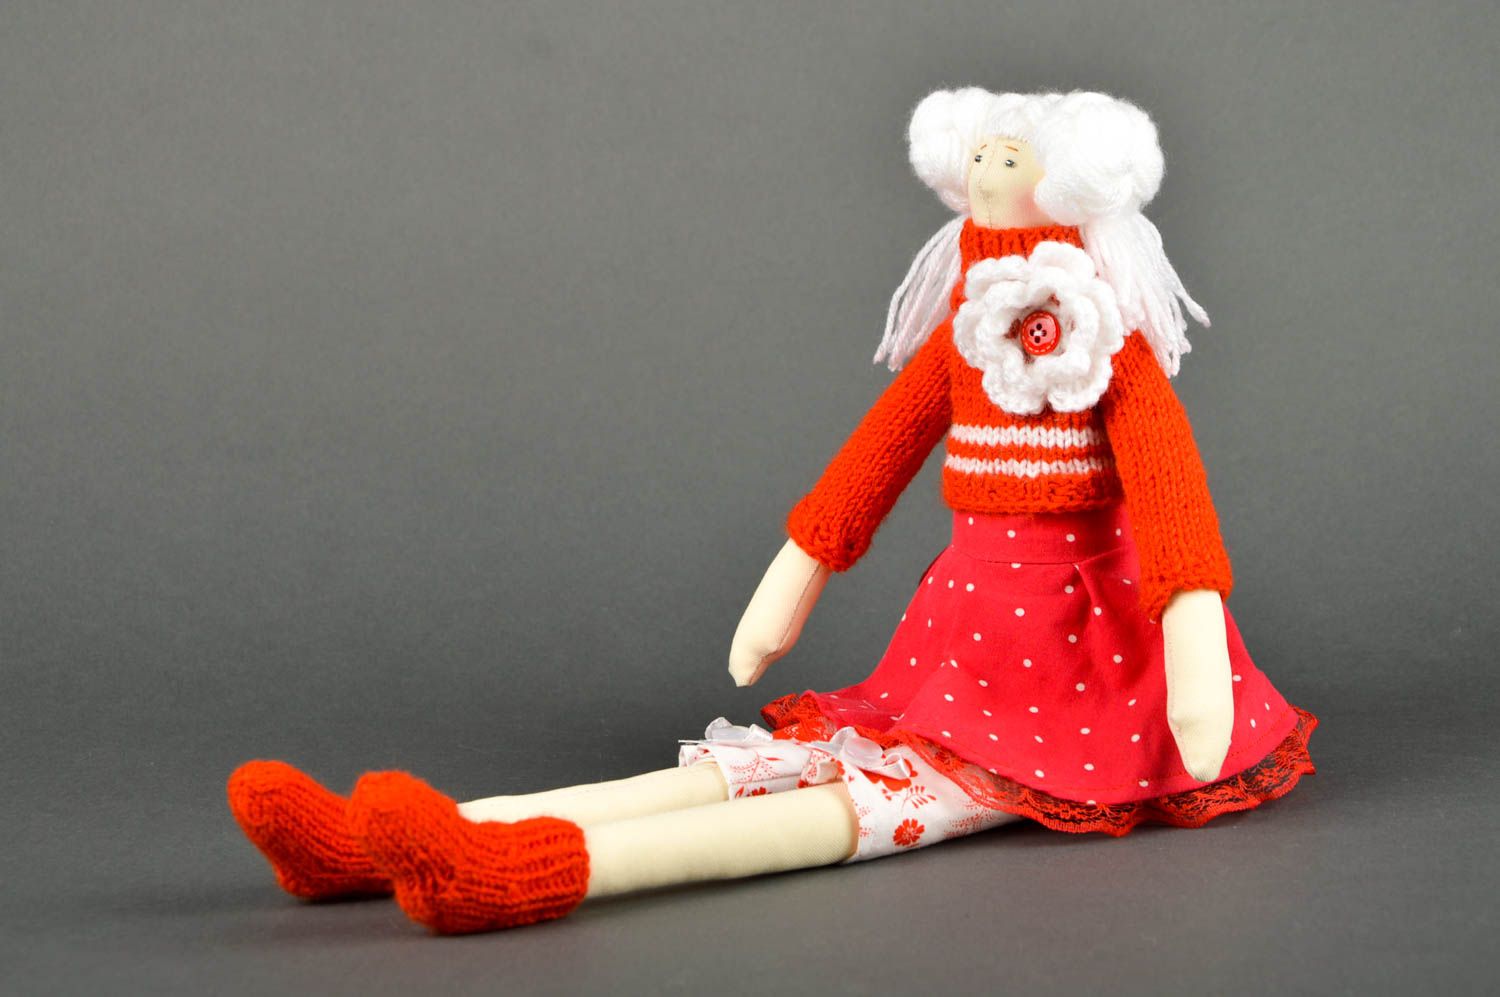 Rag doll handmade fabric toy fabric toy for children nursery decor ideas photo 2